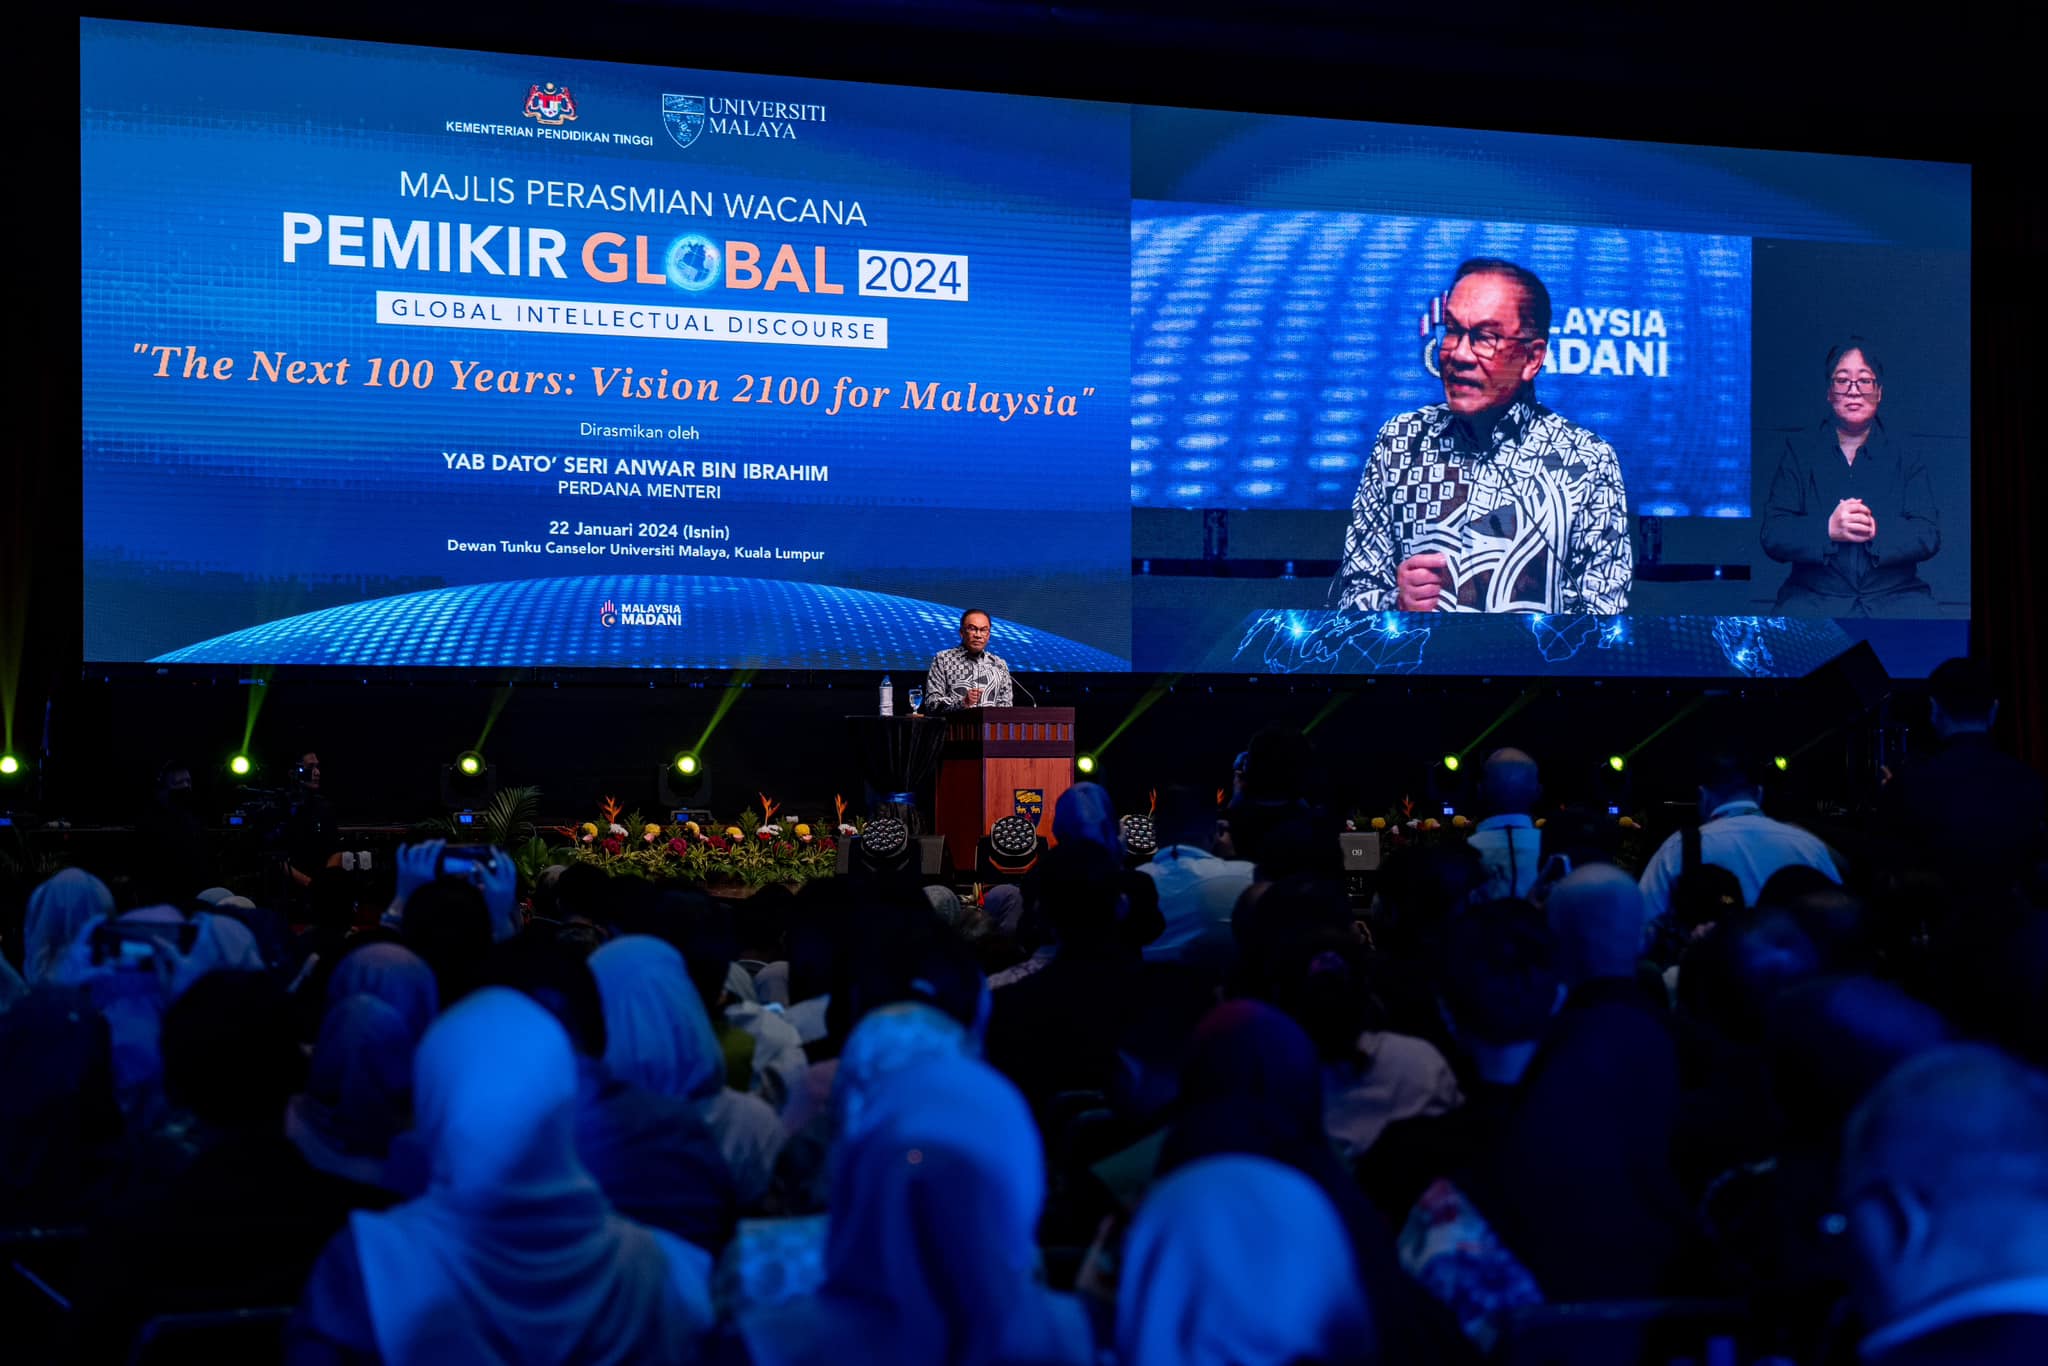 [UPDATED] Stop old formal bureaucracy, allow unis to set own priorities, Anwar tells MoHE